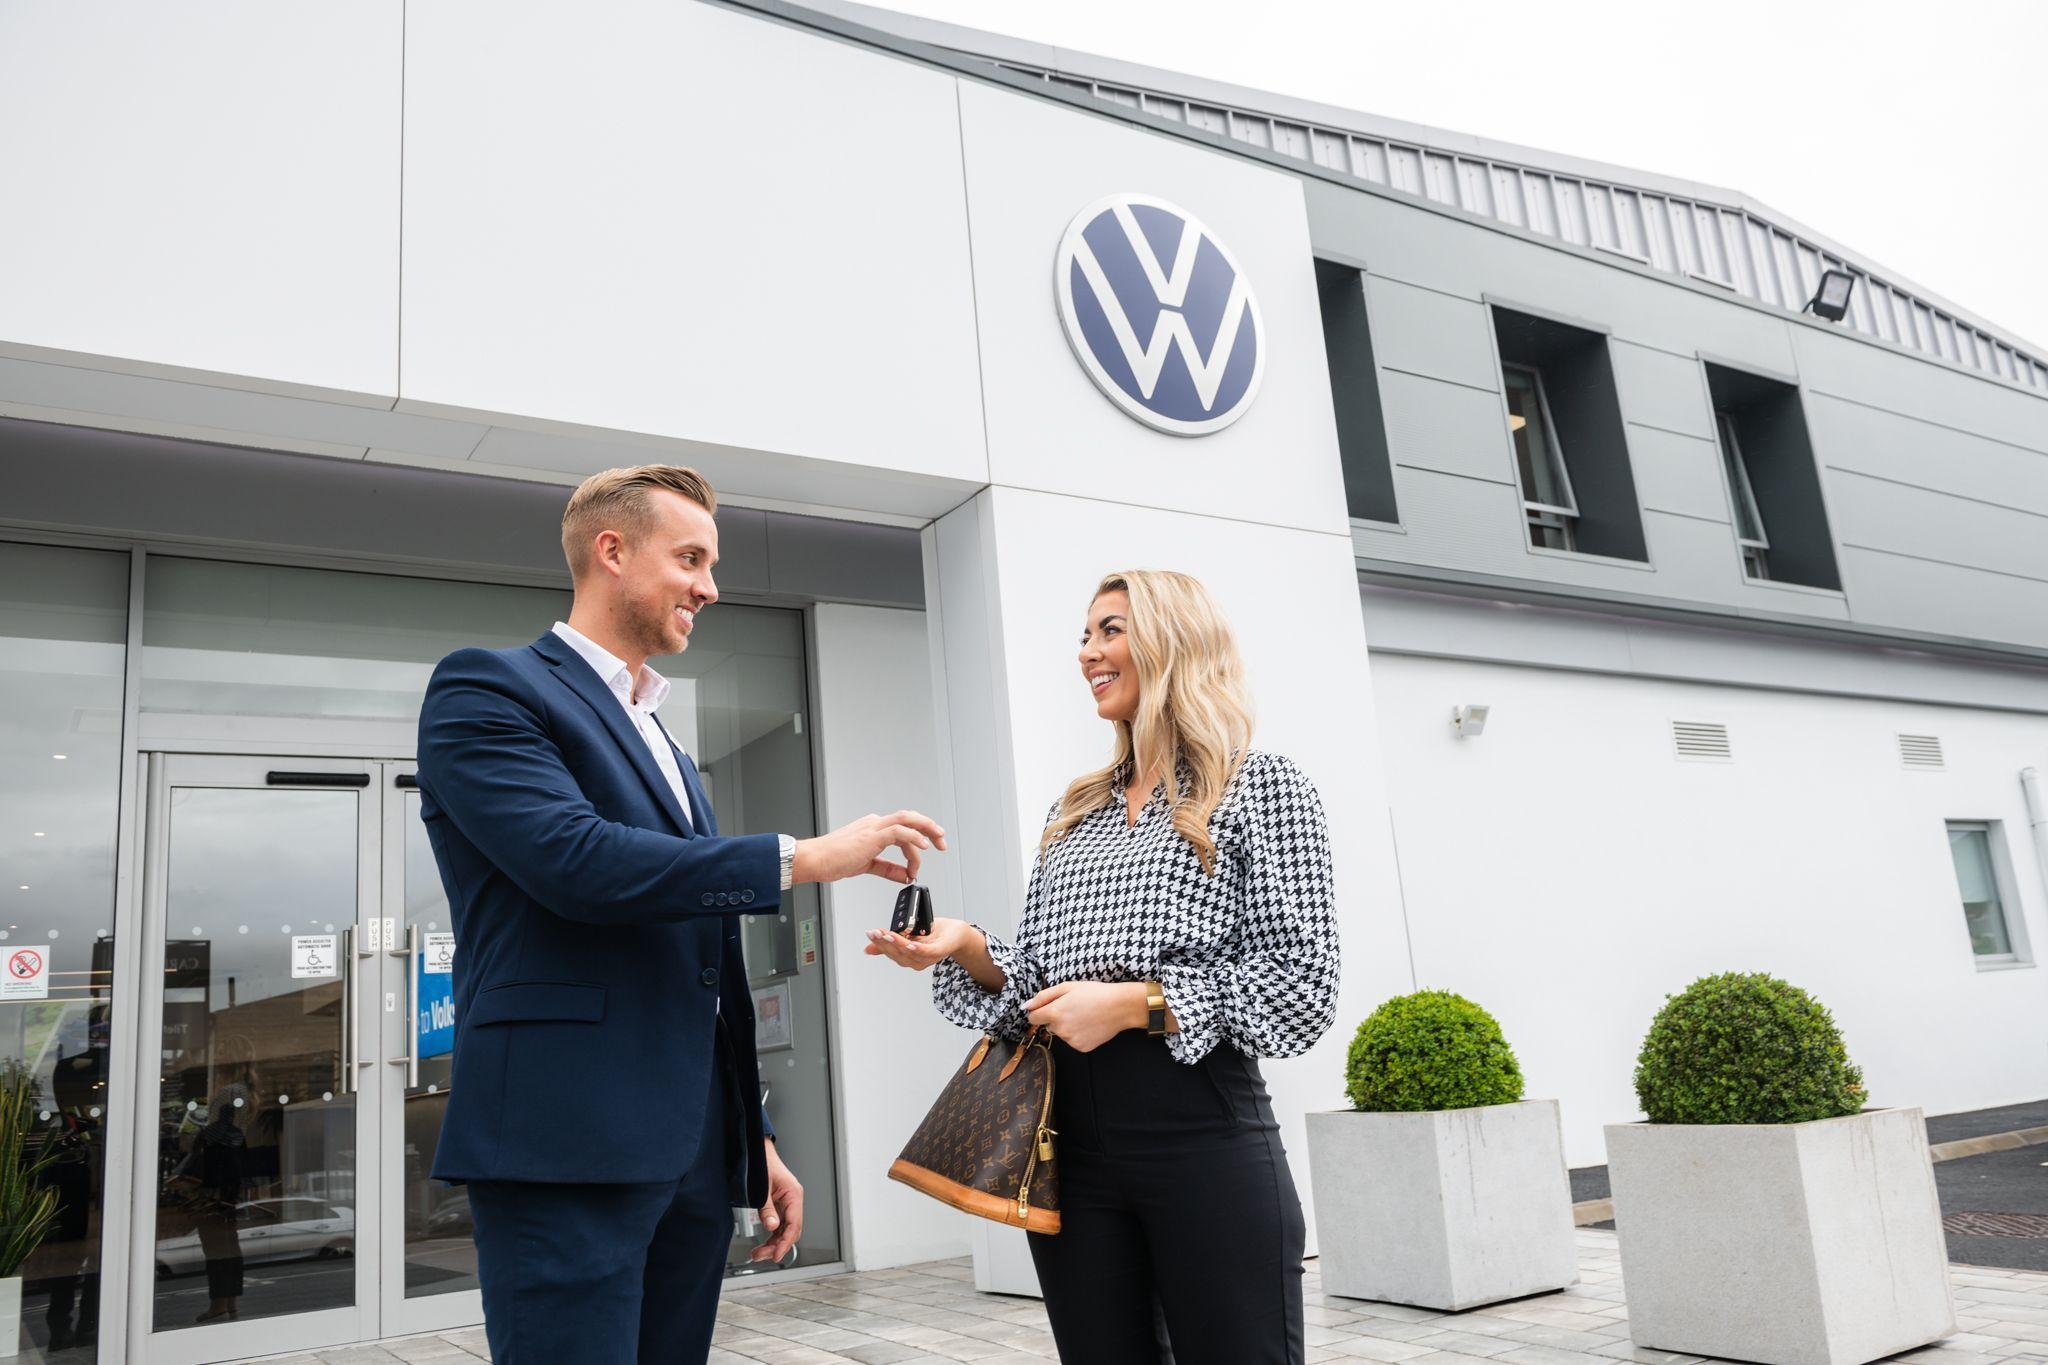 Volkswagen Service Advisor hands over keys to happy customer after service